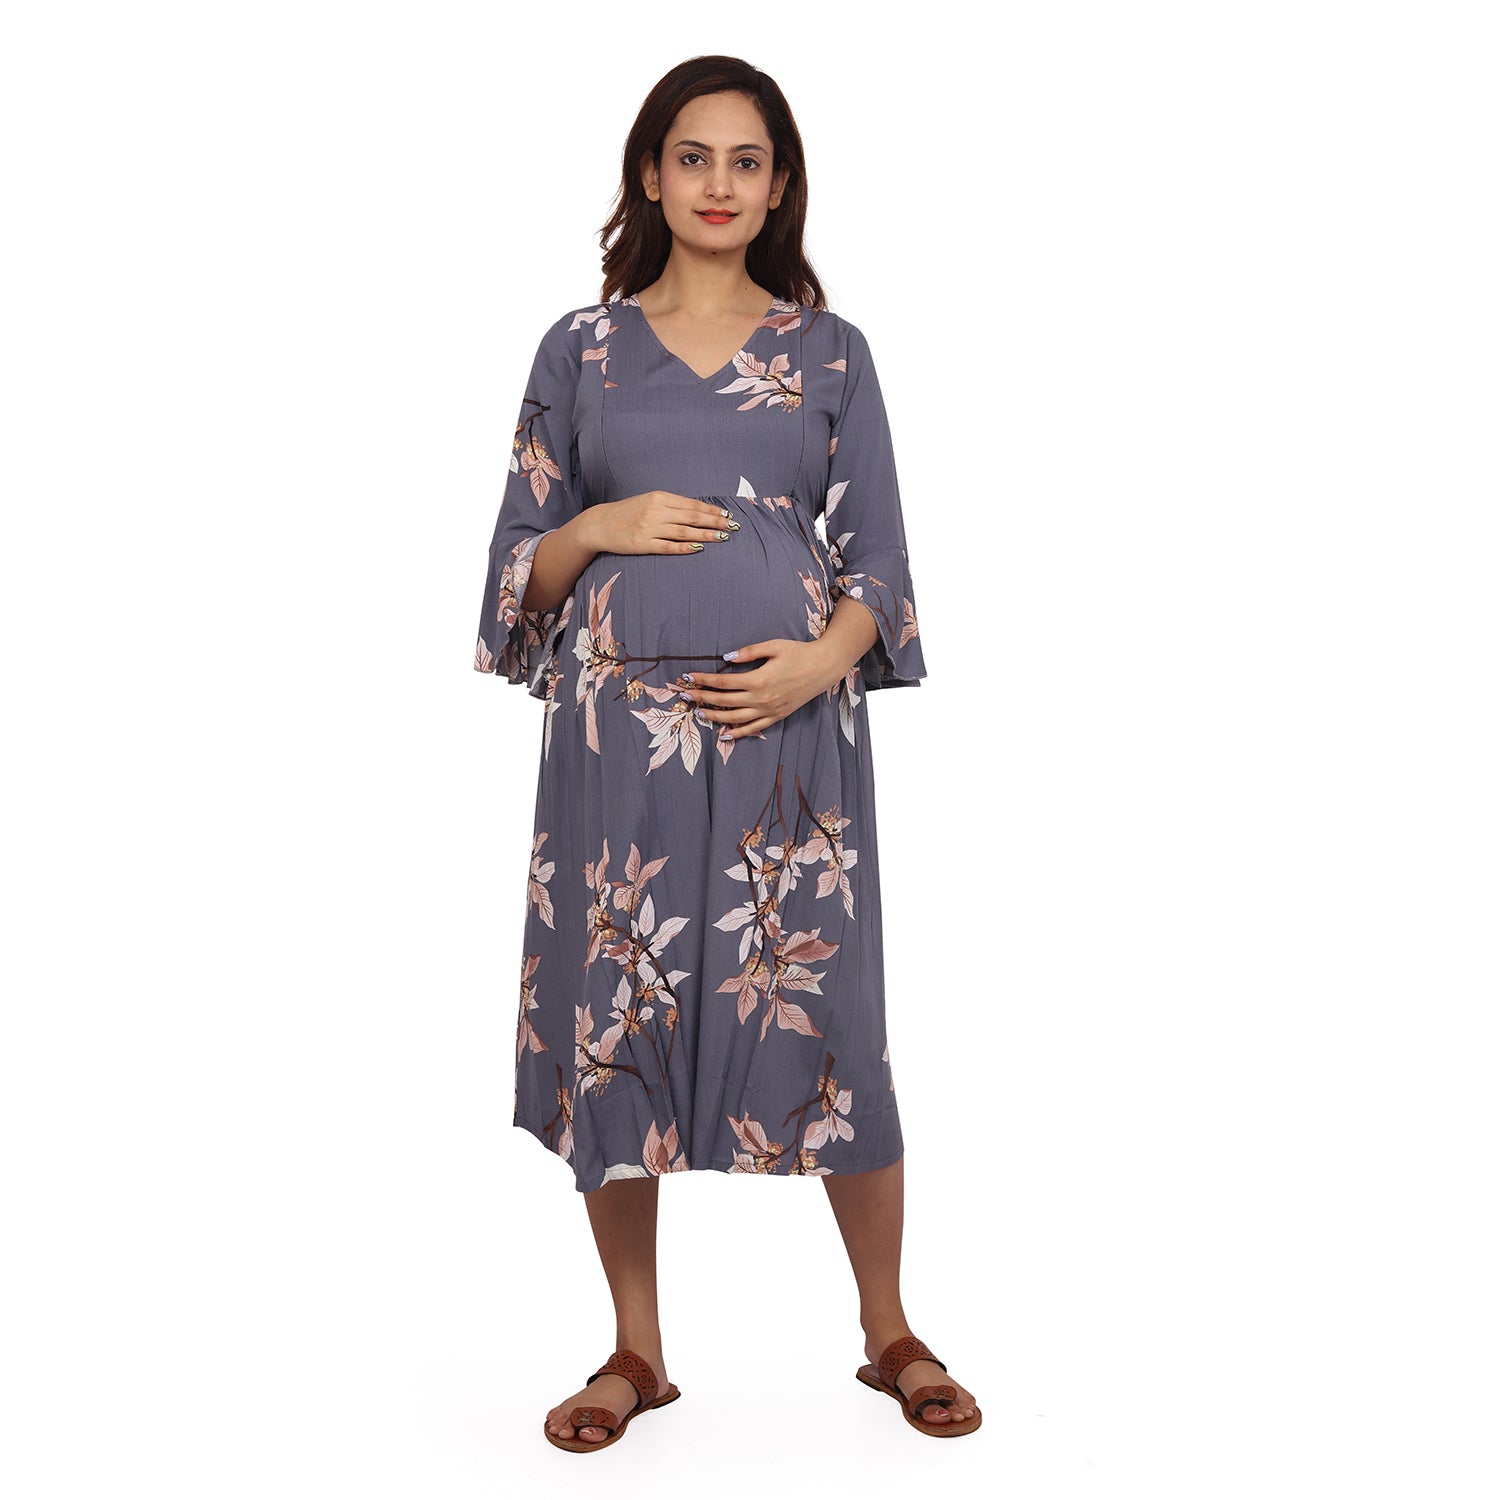 Baby Moo Half Bell Sleeves Comfortable Nursing And Maternity Dress Flower Print - Grey